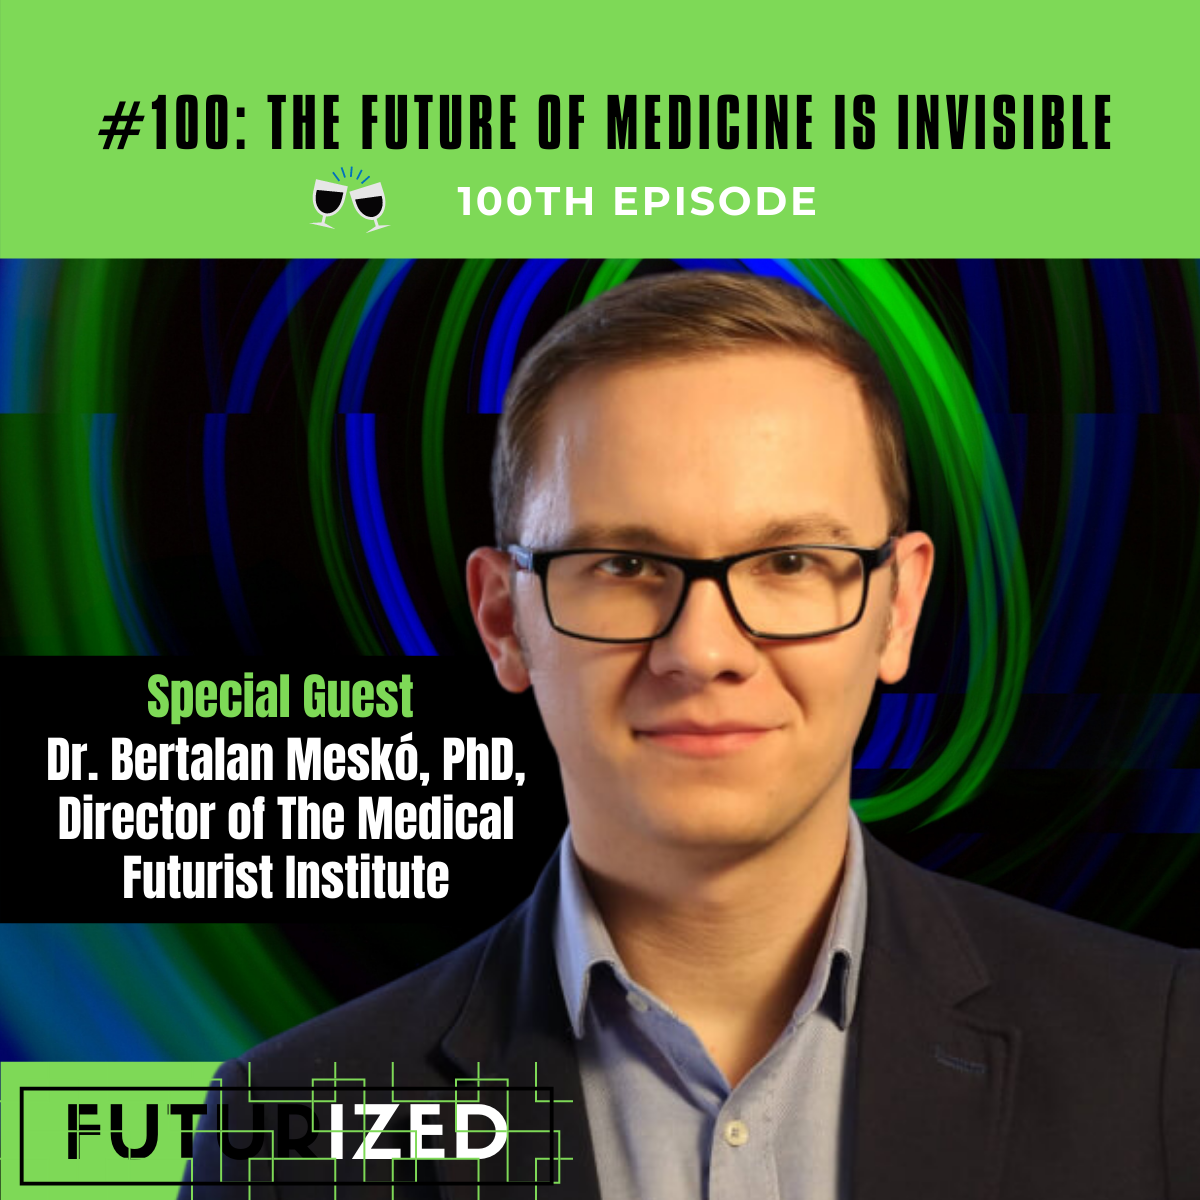 The Future of Medicine is Invisible Image